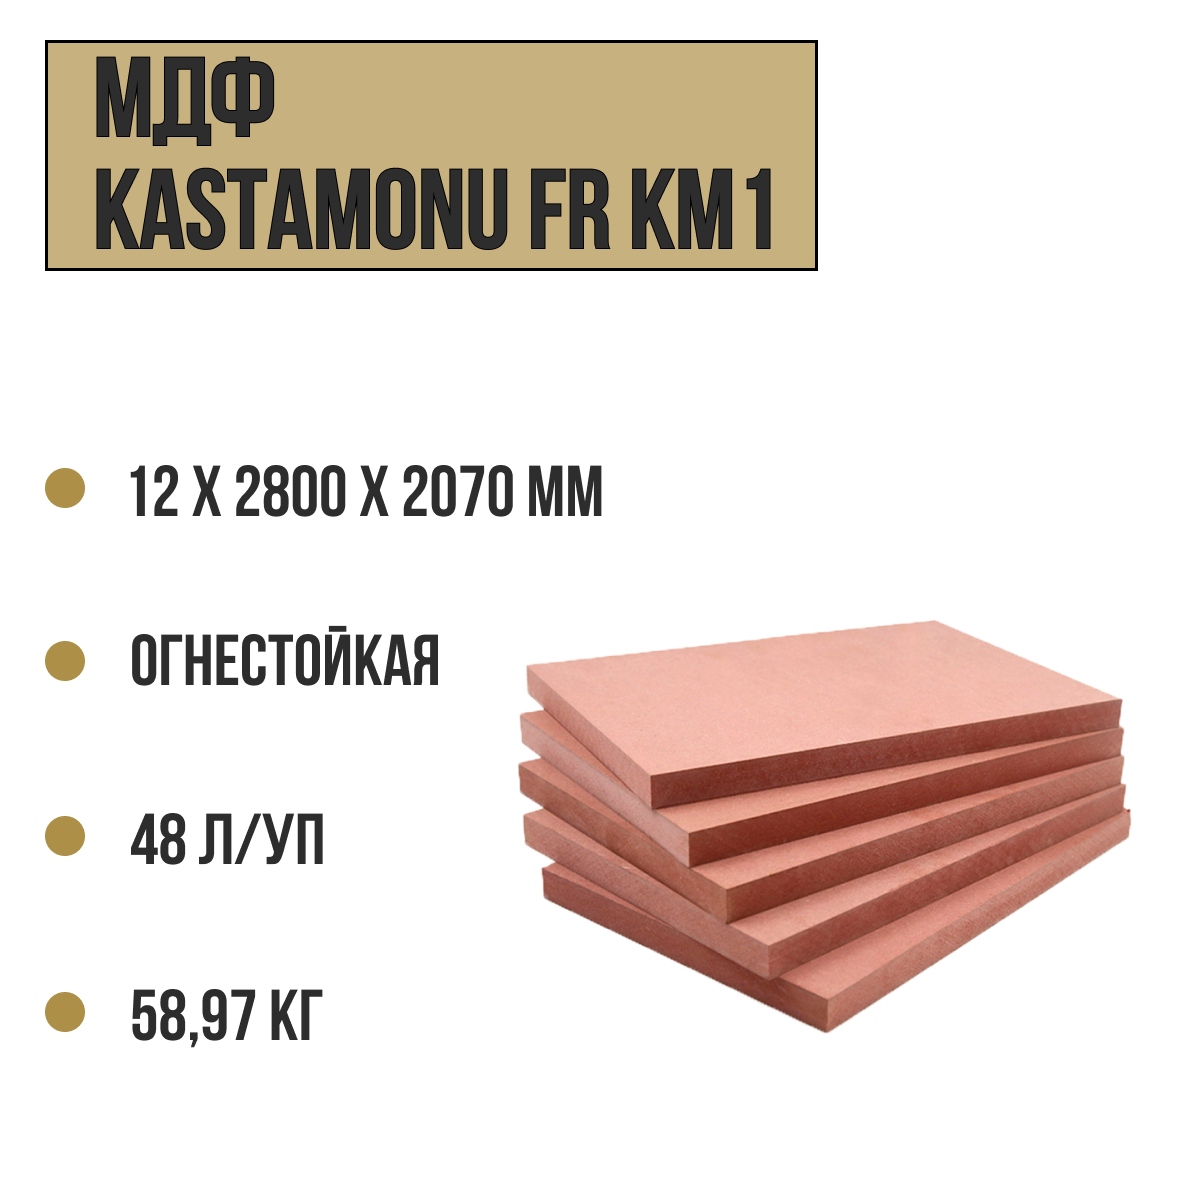 МДФ Kastamonu FR KM1 - огнестойкая плита ш2 12ммх2800х2070 (48л/уп, вес 58,97кг)